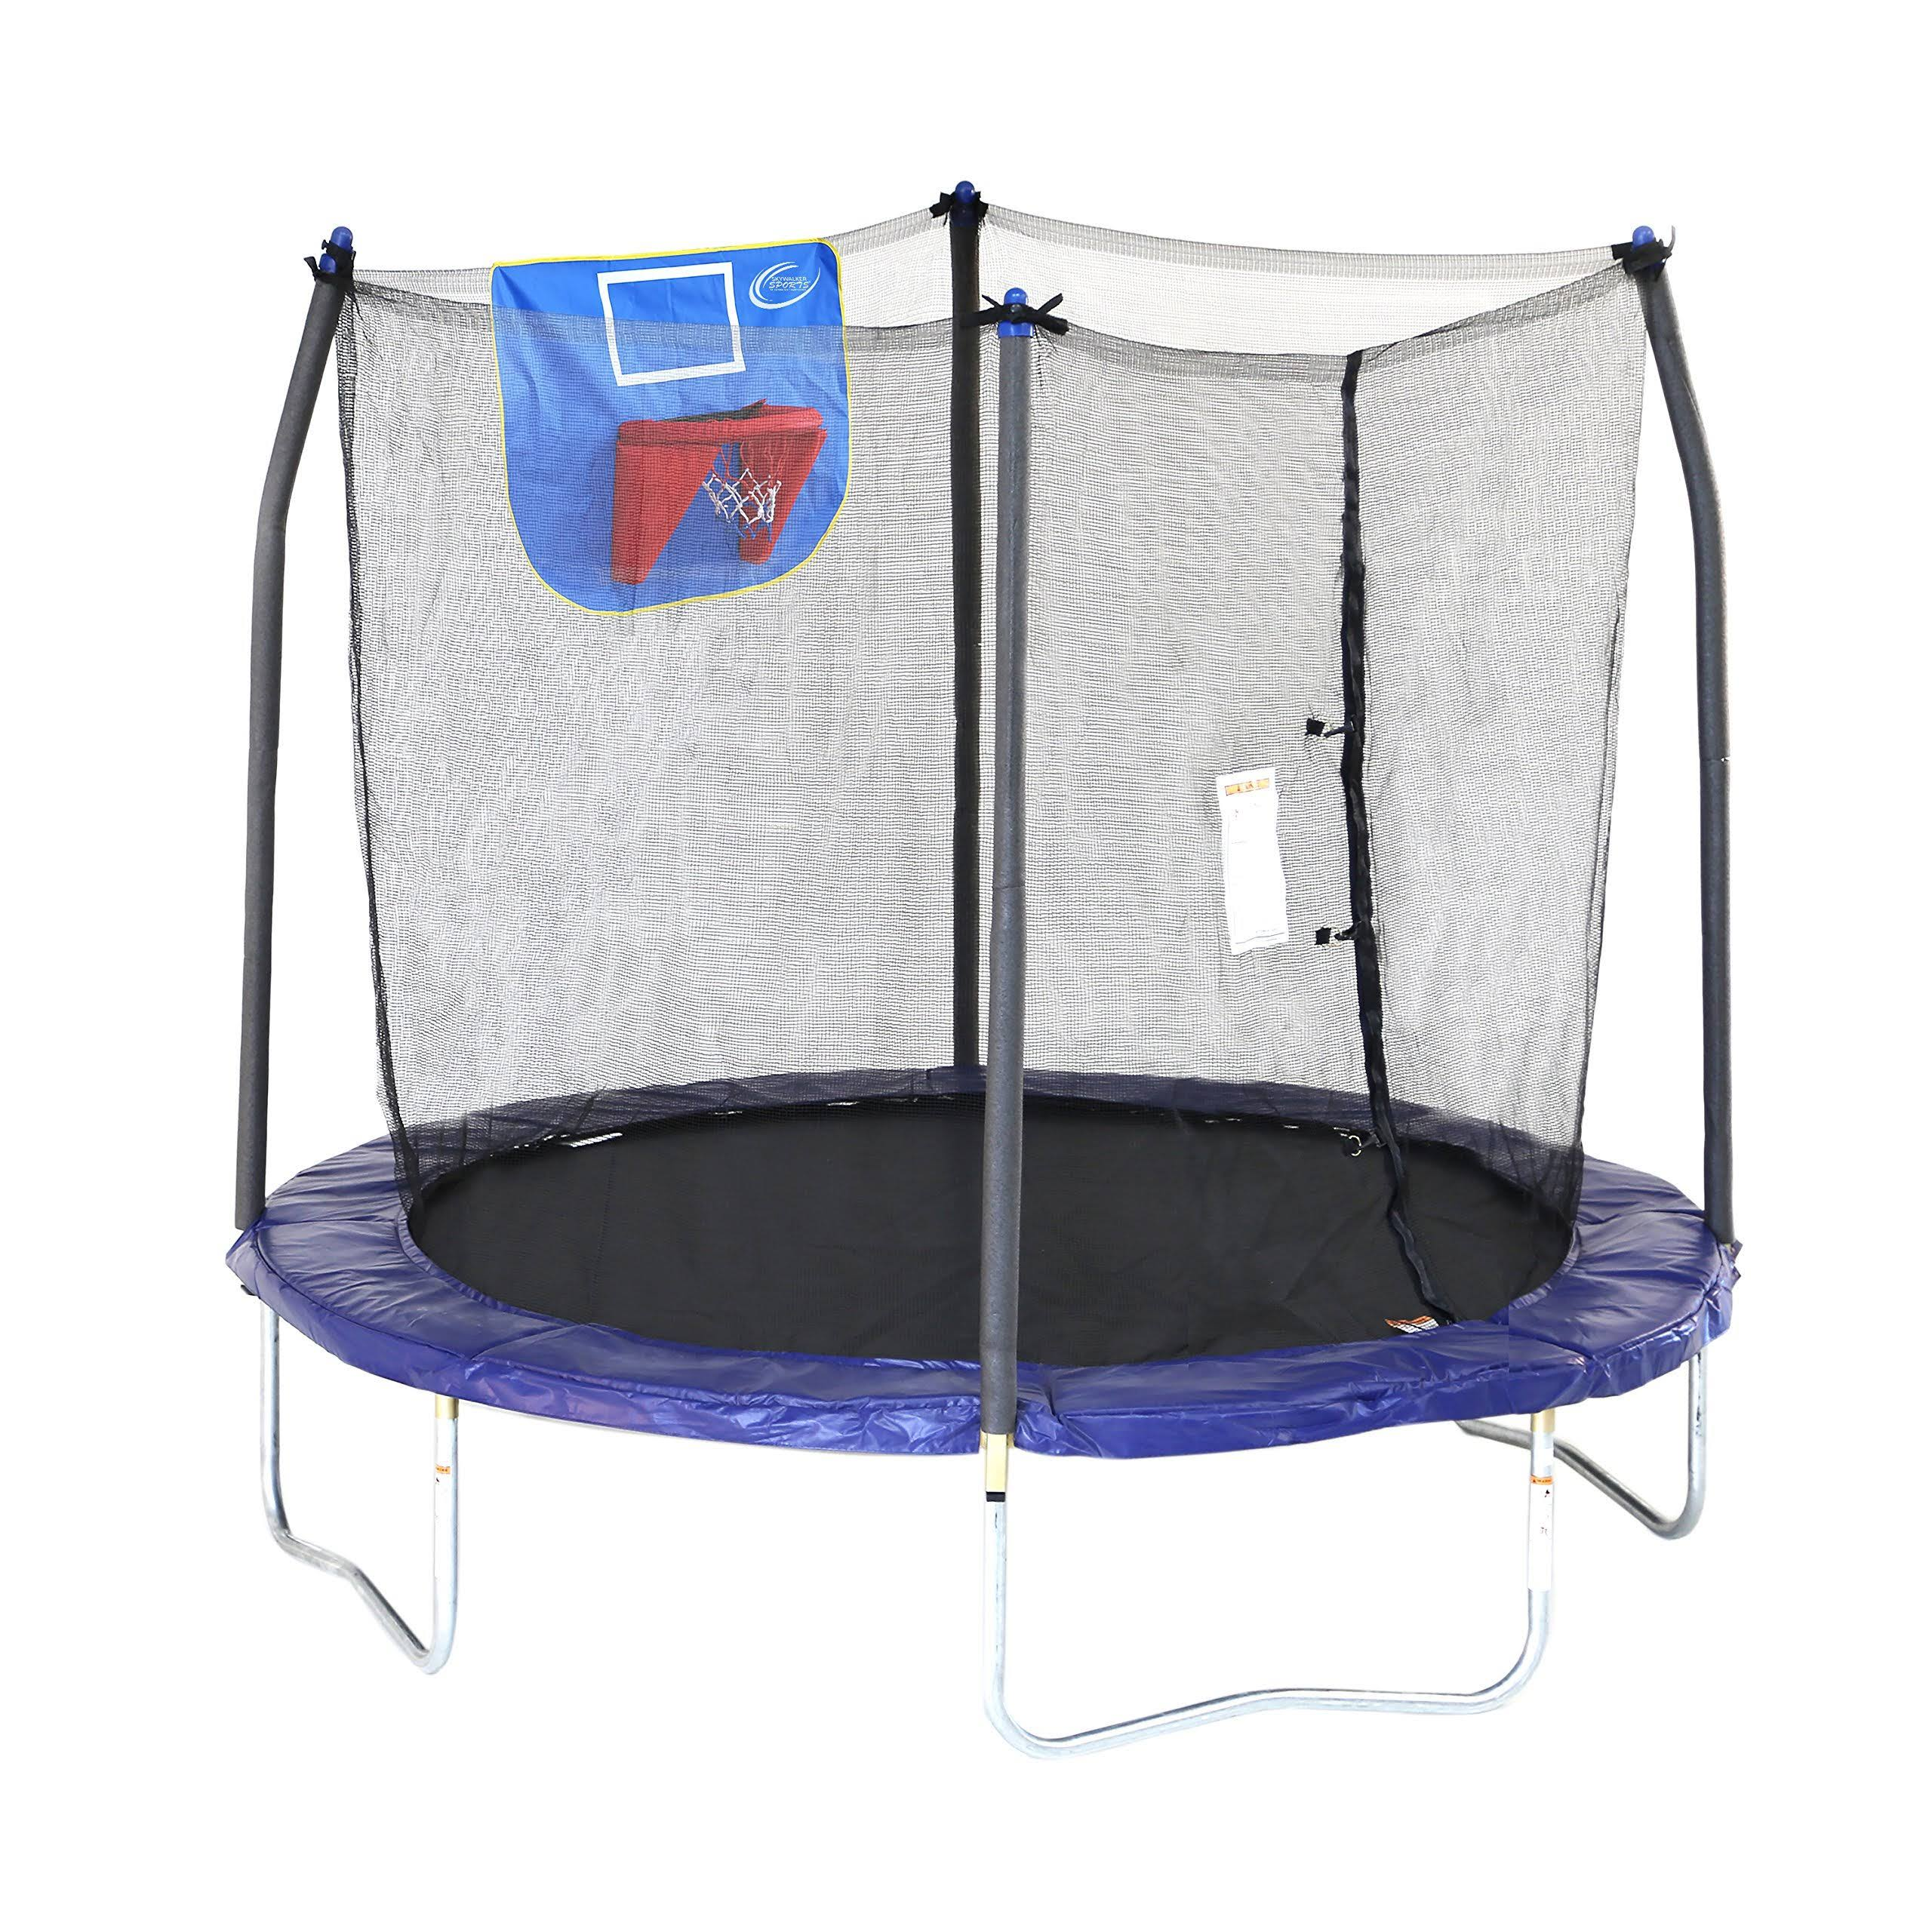 Skywalker Trampolines Jump N’ Dunk Trampoline with Safety Enclosure and Basketball Hoop, Blue, 12-Feet